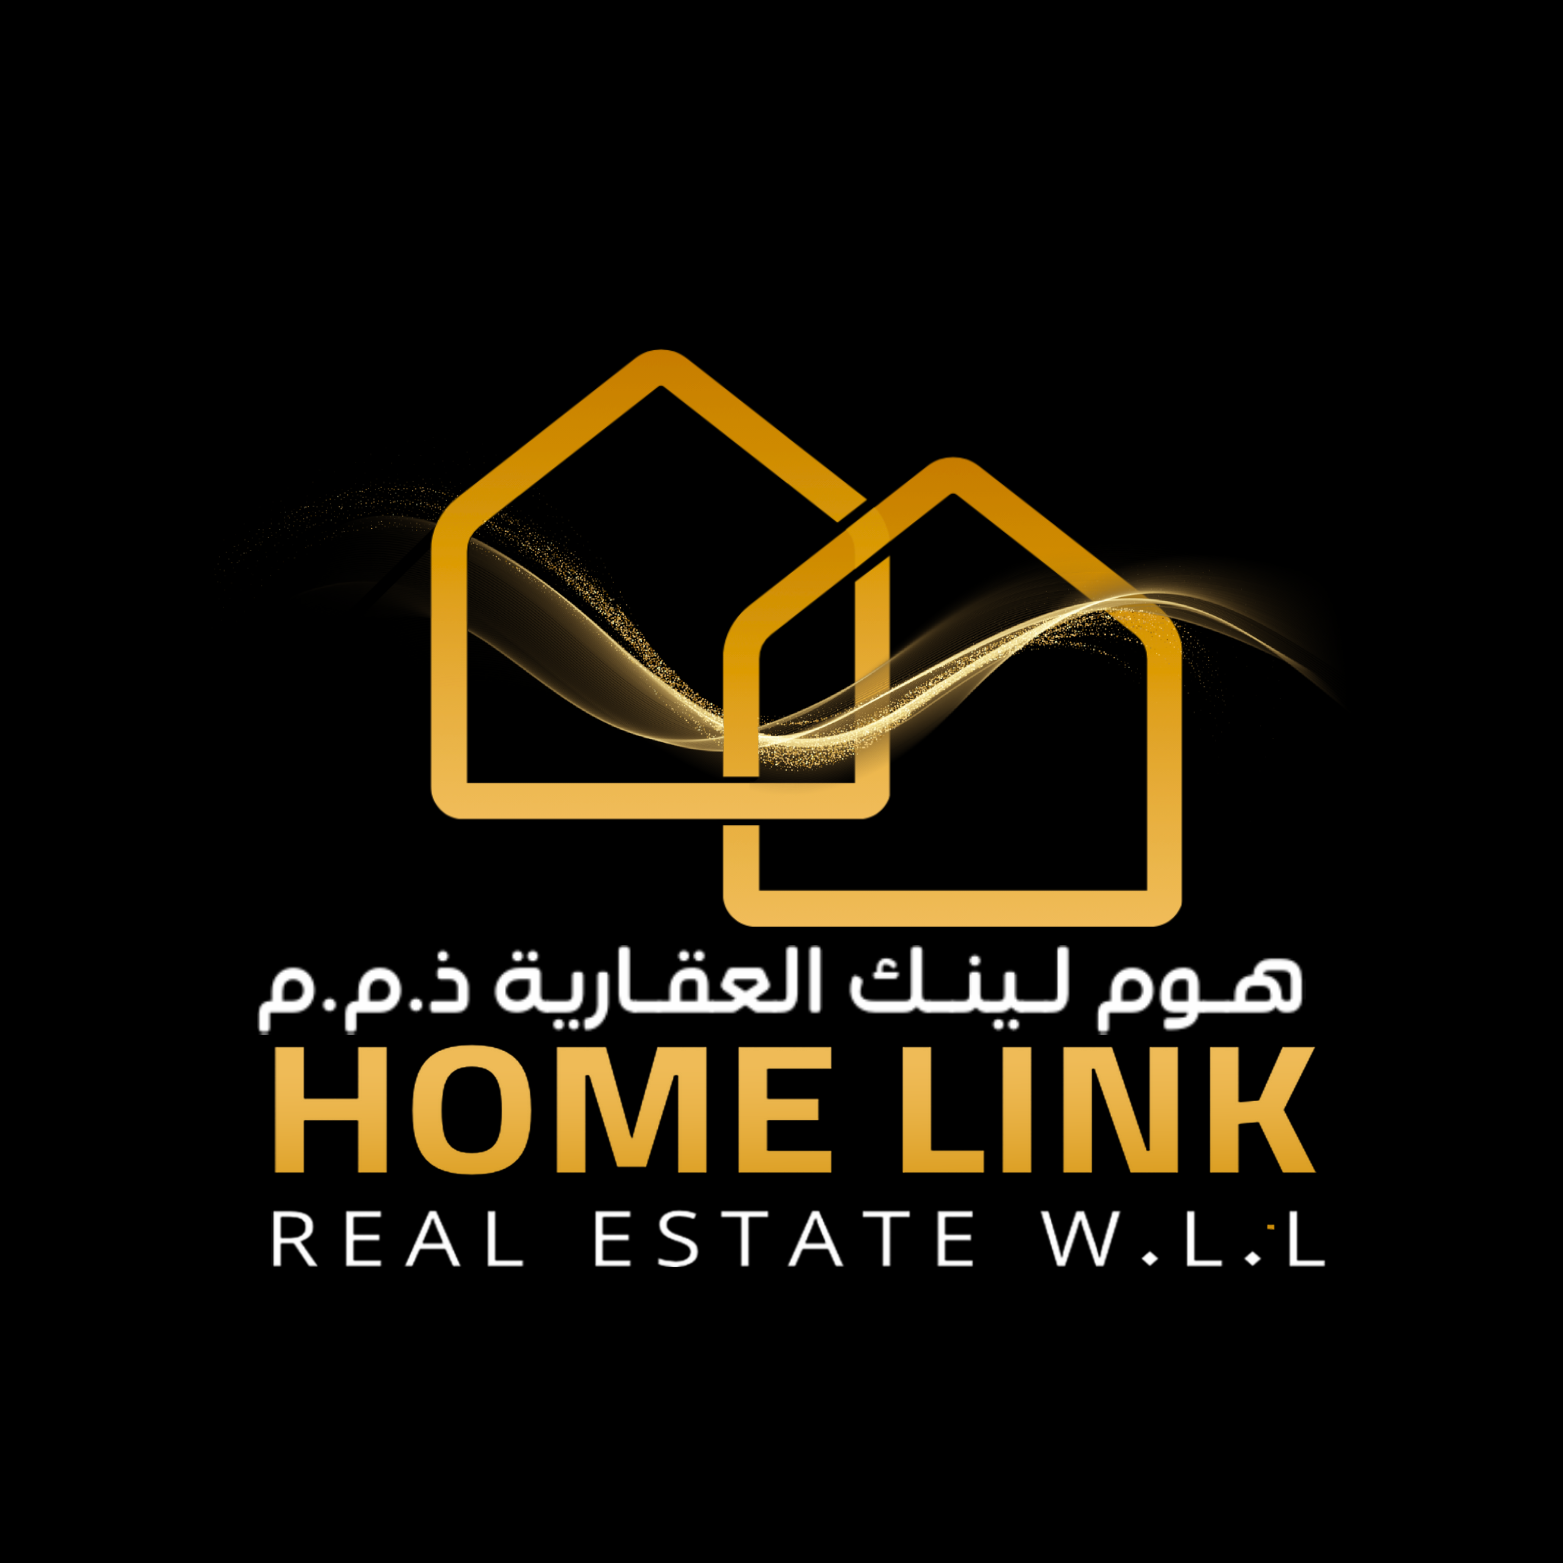 CM Home Link Real Estate W.L.L